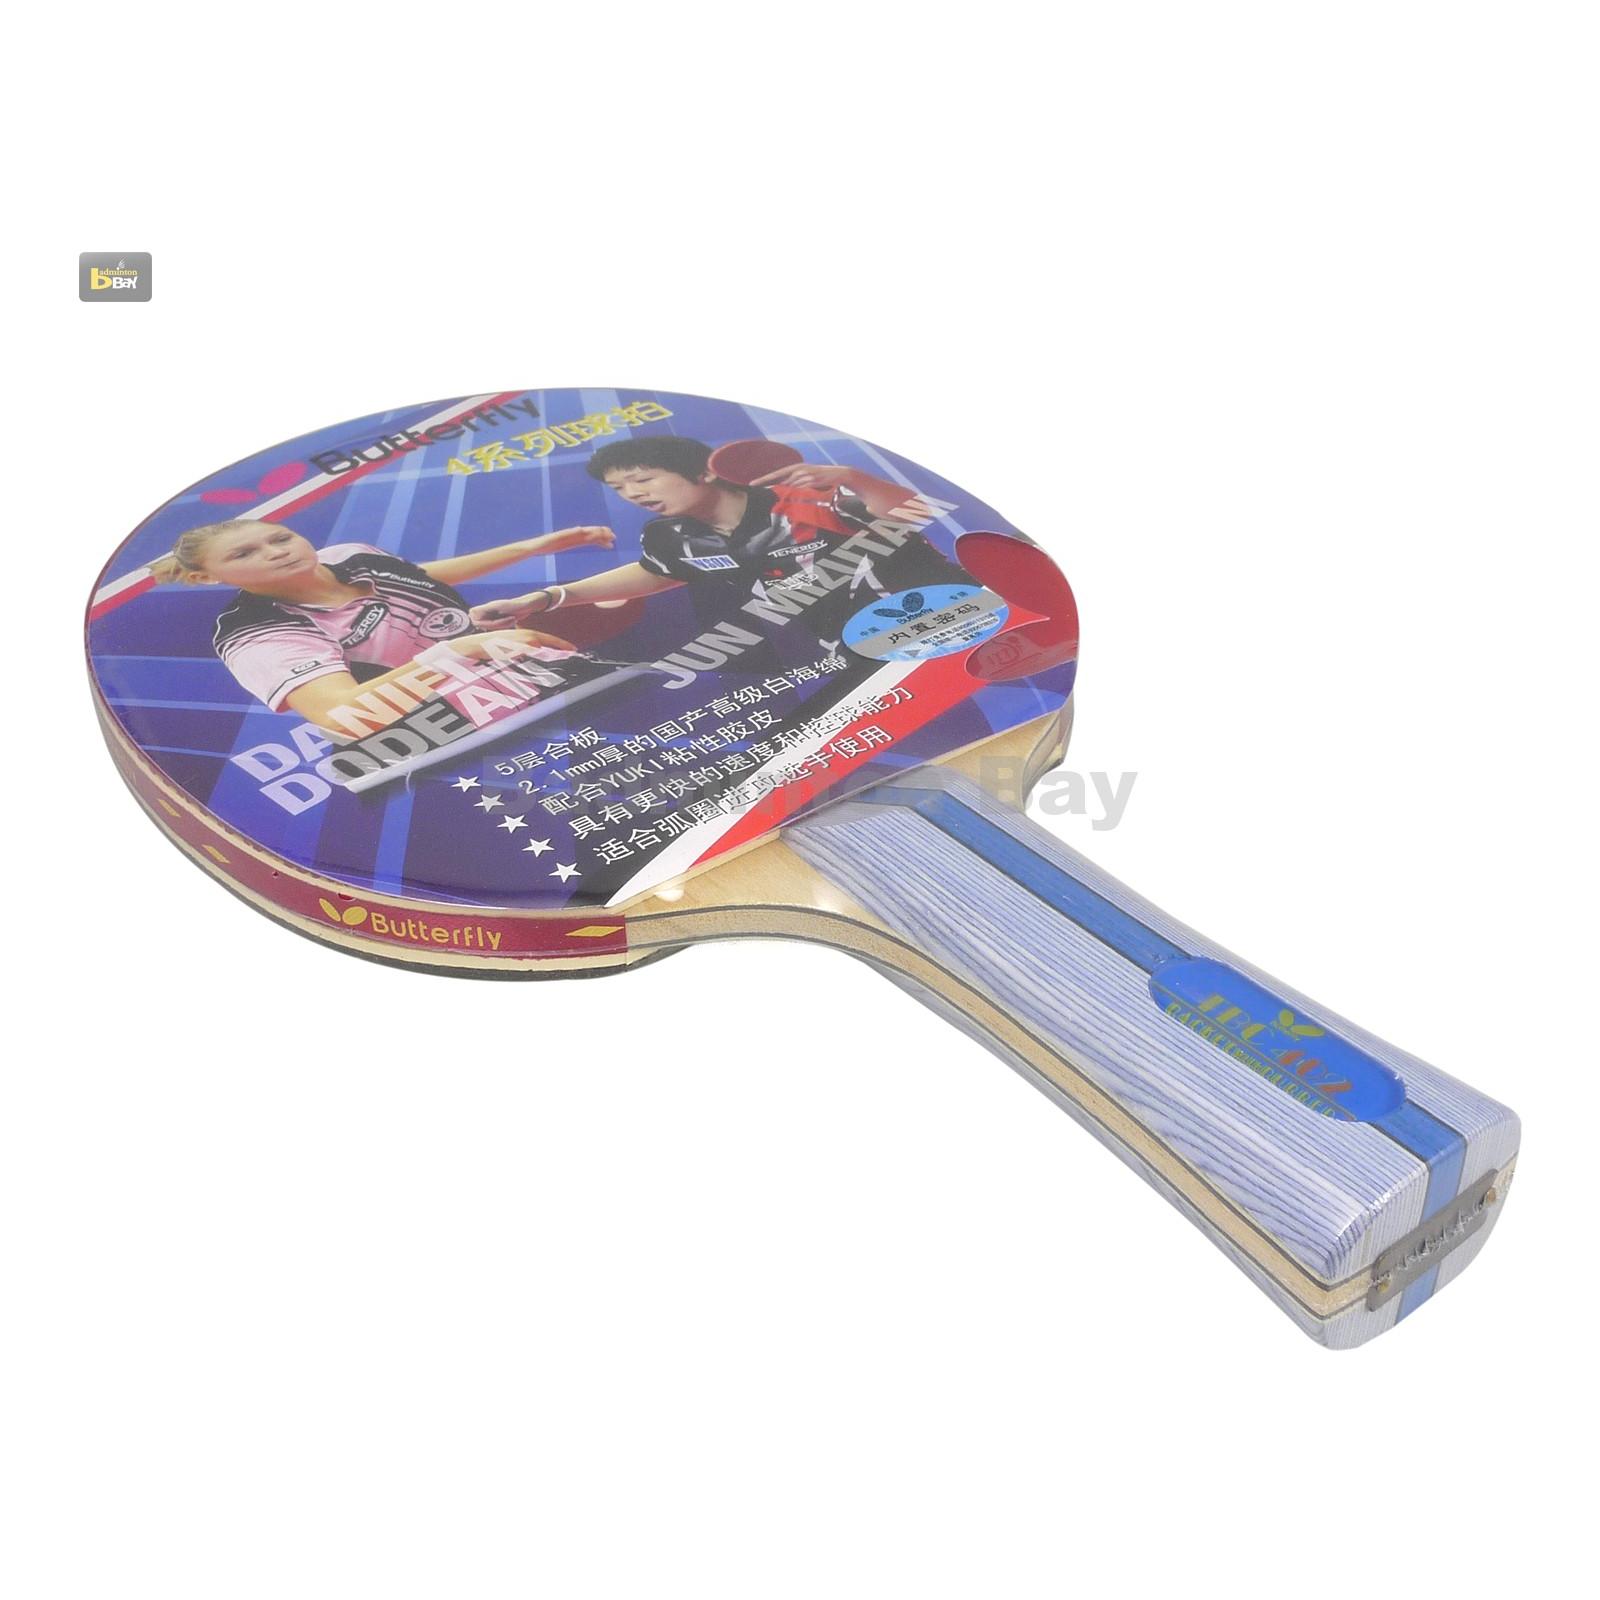 Butterfly 4 Star-402 Long Handle Table Tennis Ping Pong Racket Bat Shakehand FL 